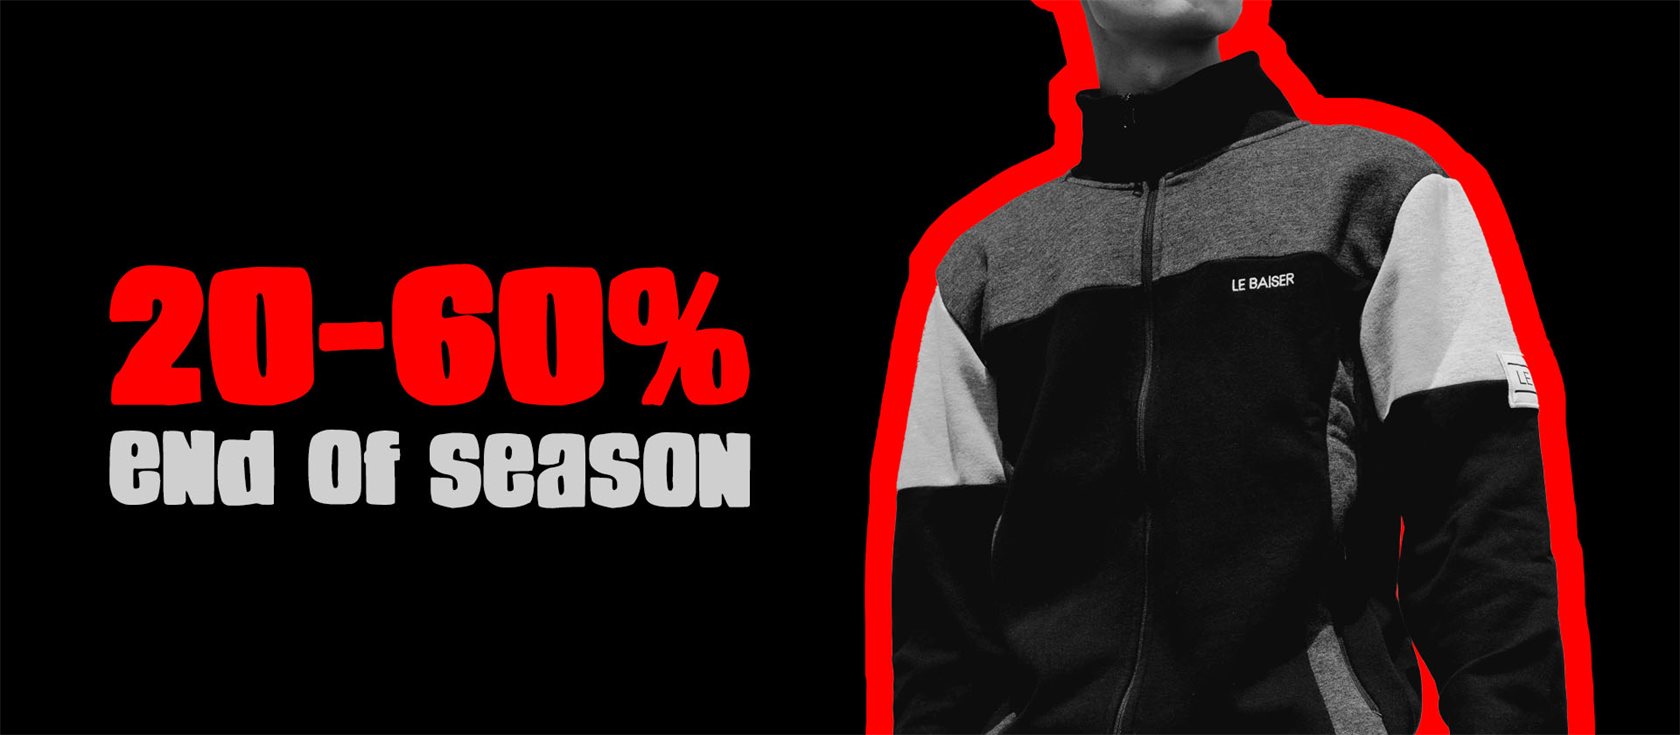 End of Season | Spara 20-60%